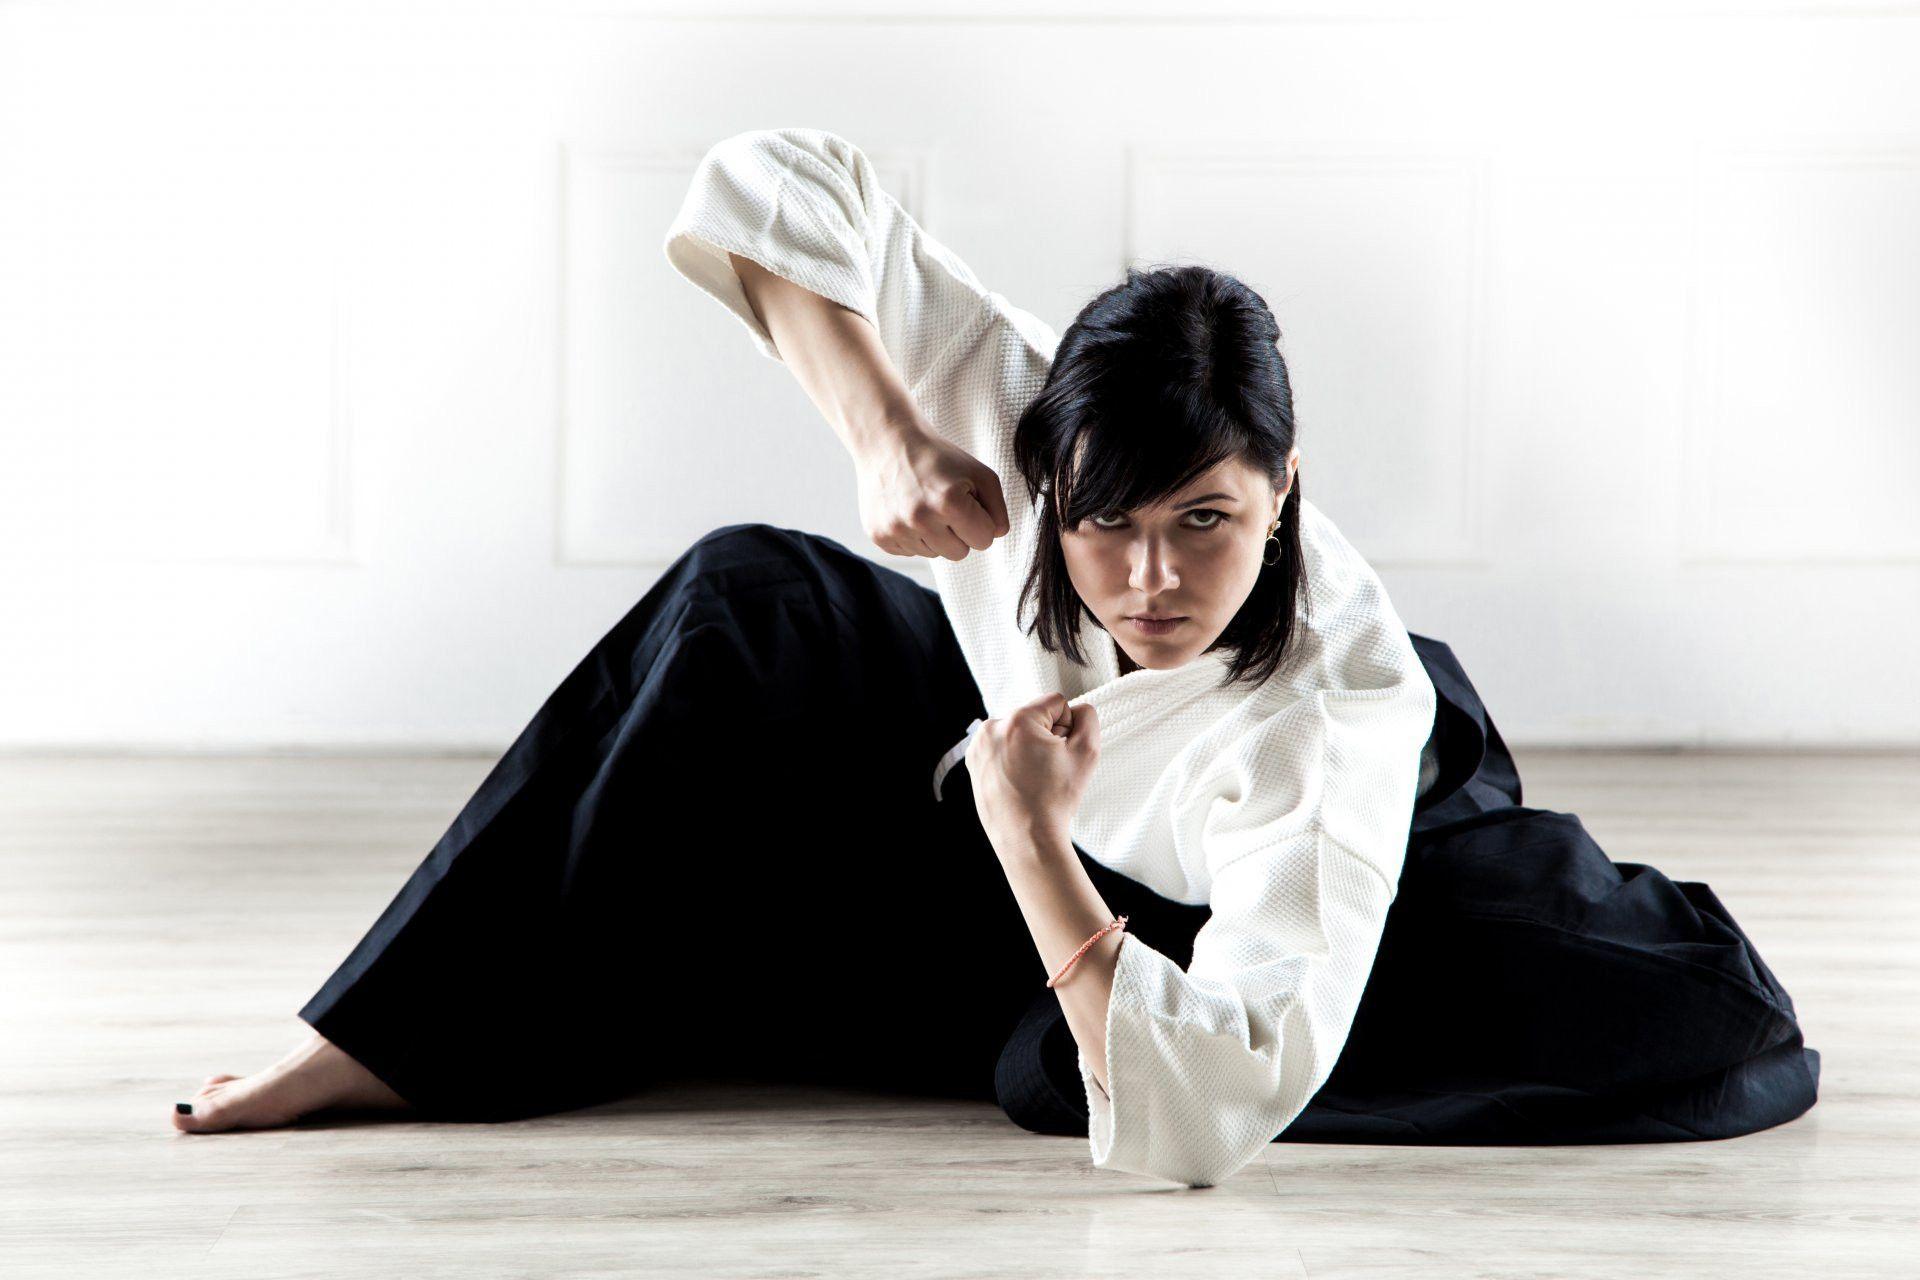 Wallpaper.wiki Aikido Girl Wallpaper PIC WPC002254